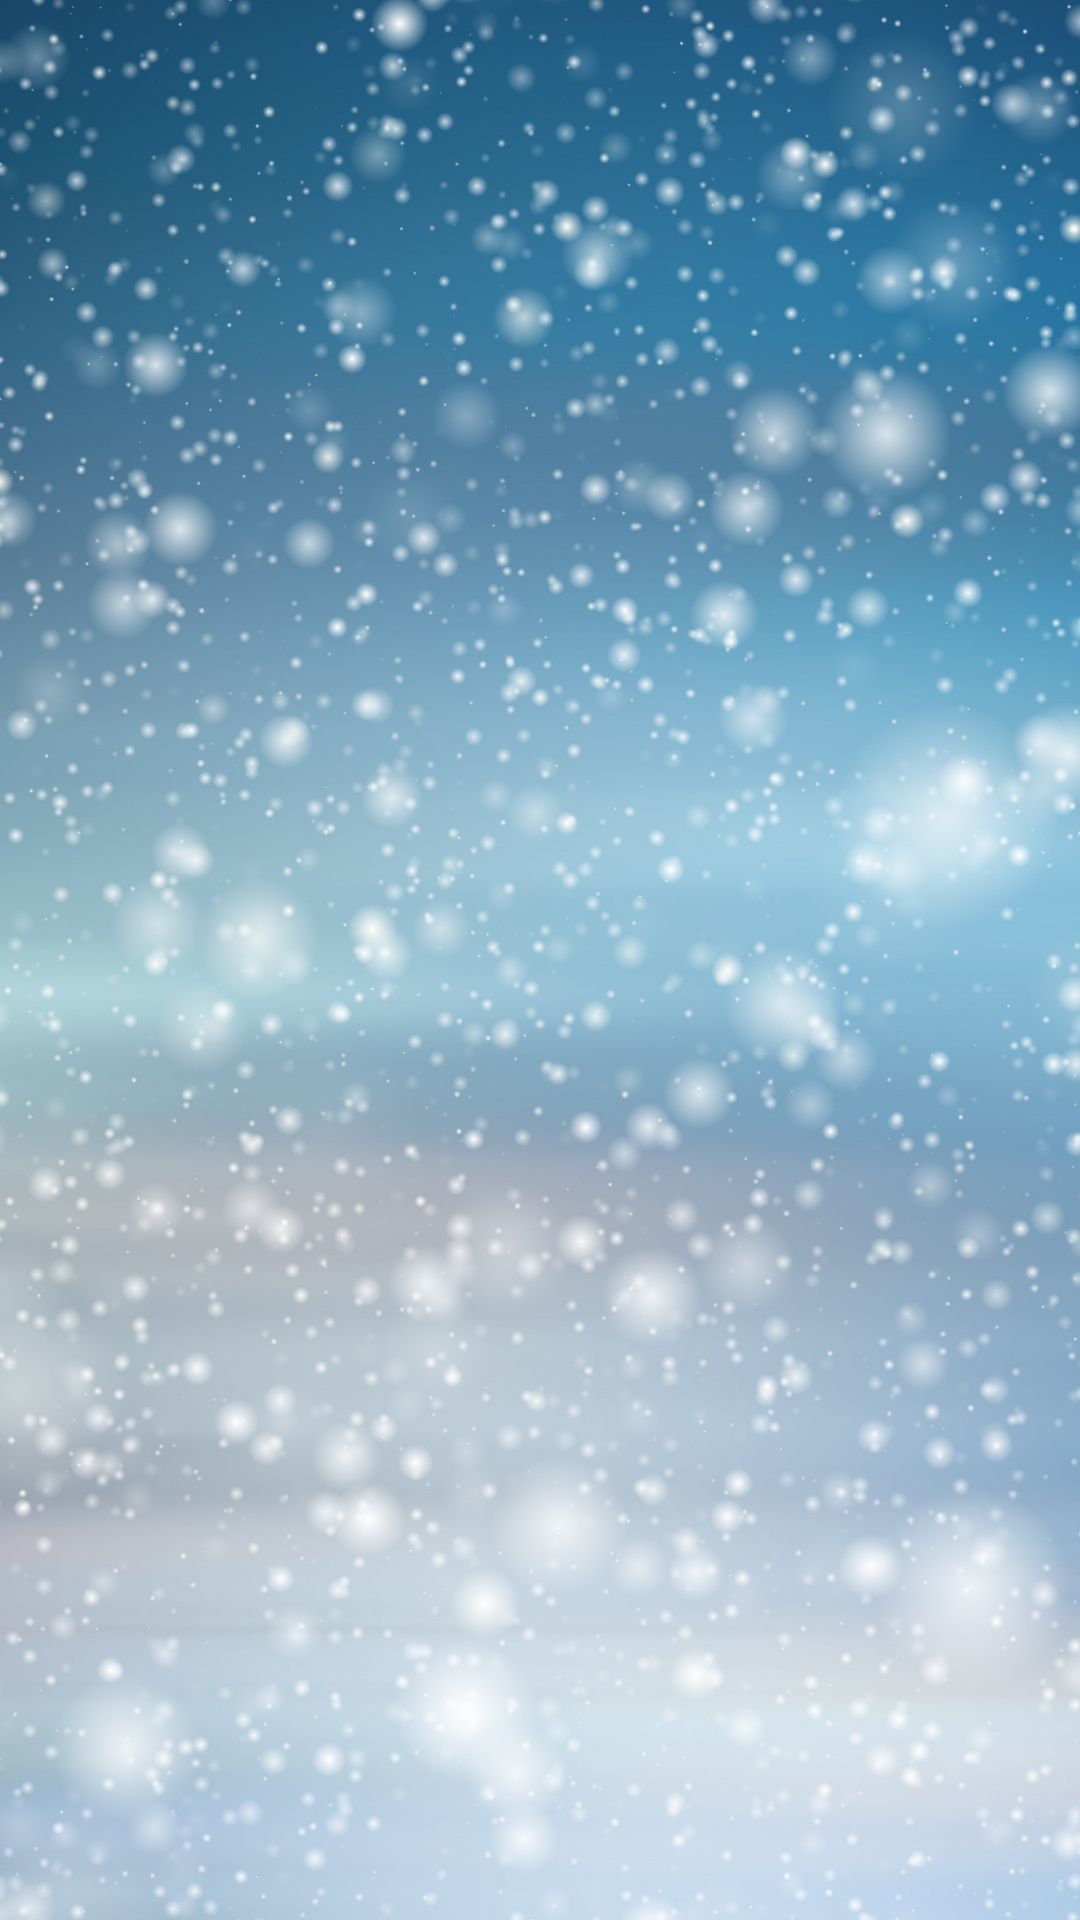 1080x1920 Glare, snowfall, Christmas, abstract wallpaper. Abstract wallpaper, Blue wallpaper iphone, Snowfall wallpaper on WallpaperBat